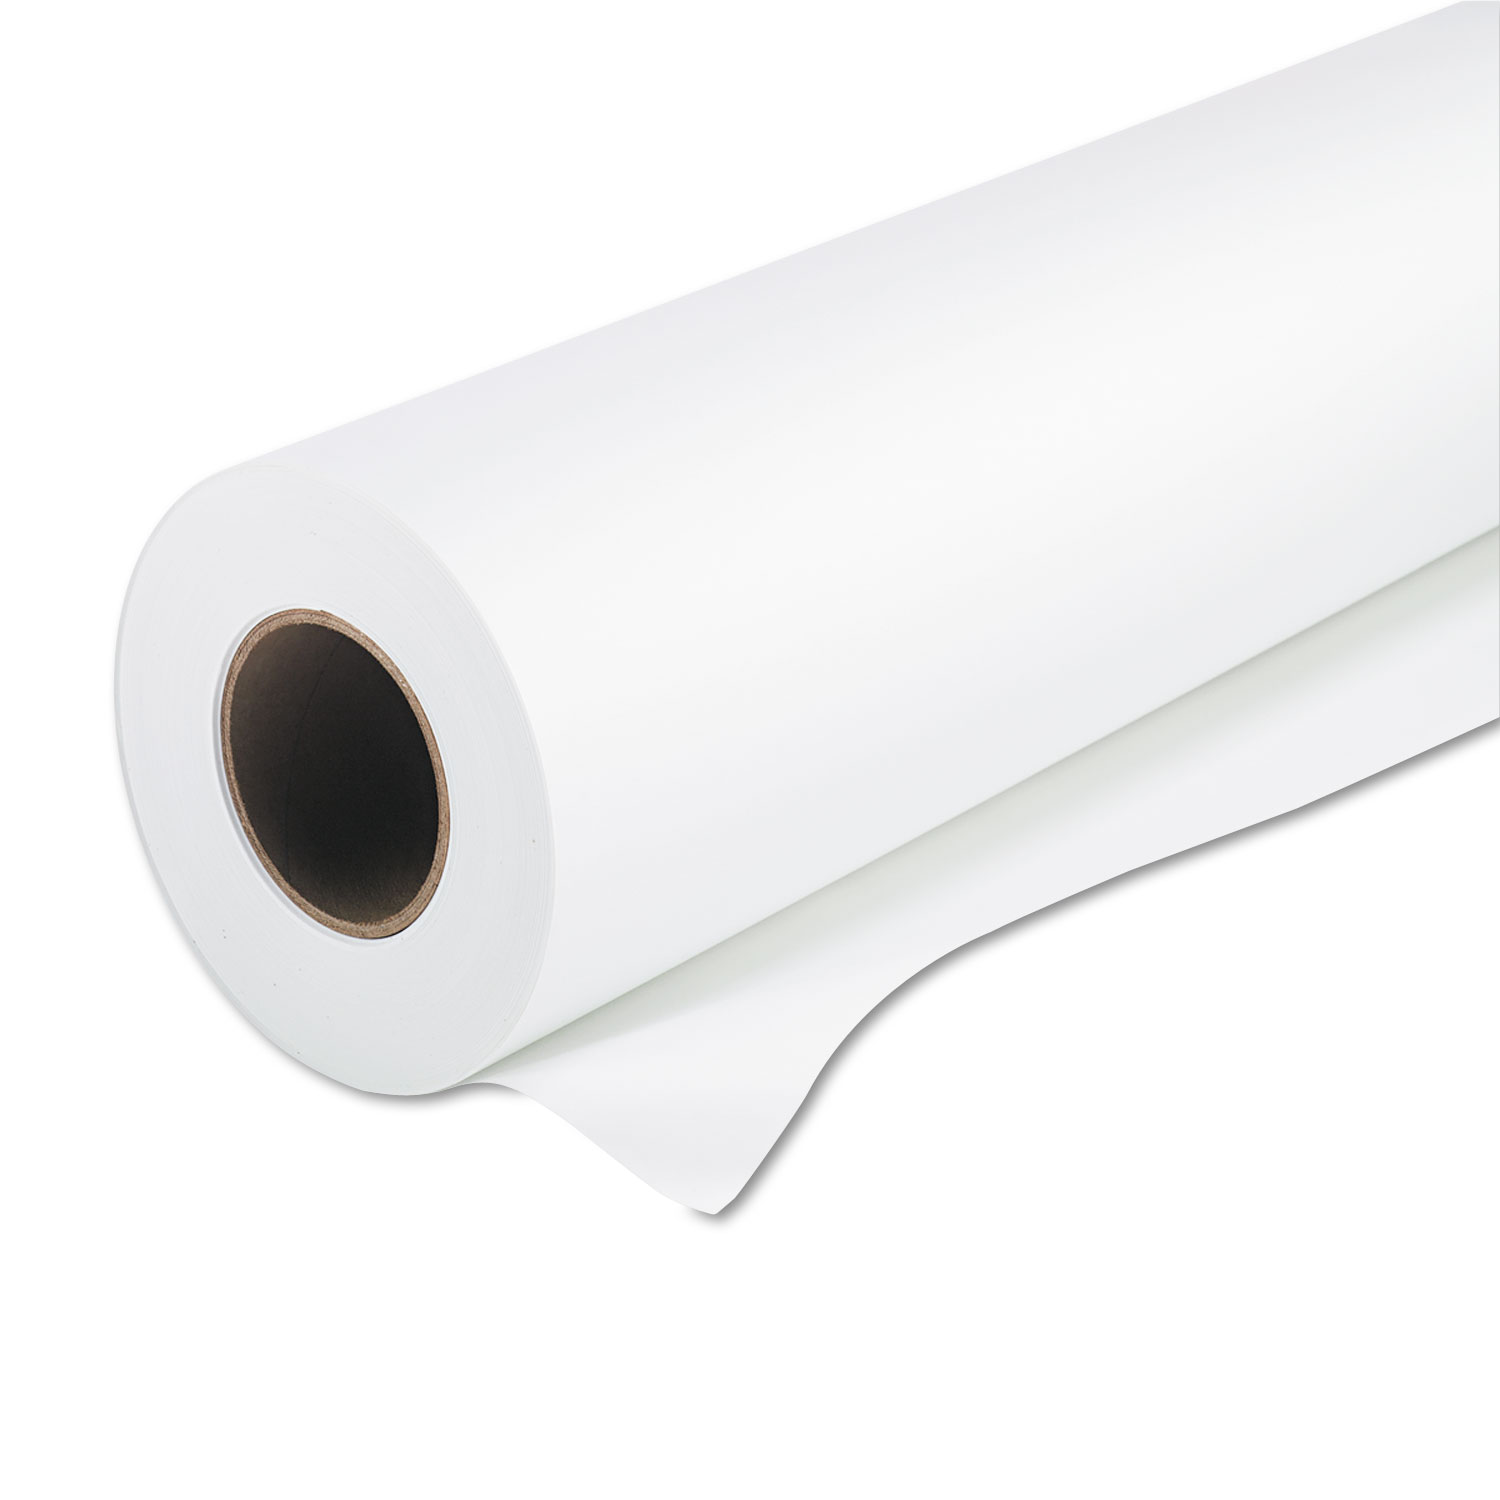  Iconex 45161 Amerigo Wide-Format Paper, 2 Core, 24 lb, 24 x 150 ft, Coated White (ICX90750212) 